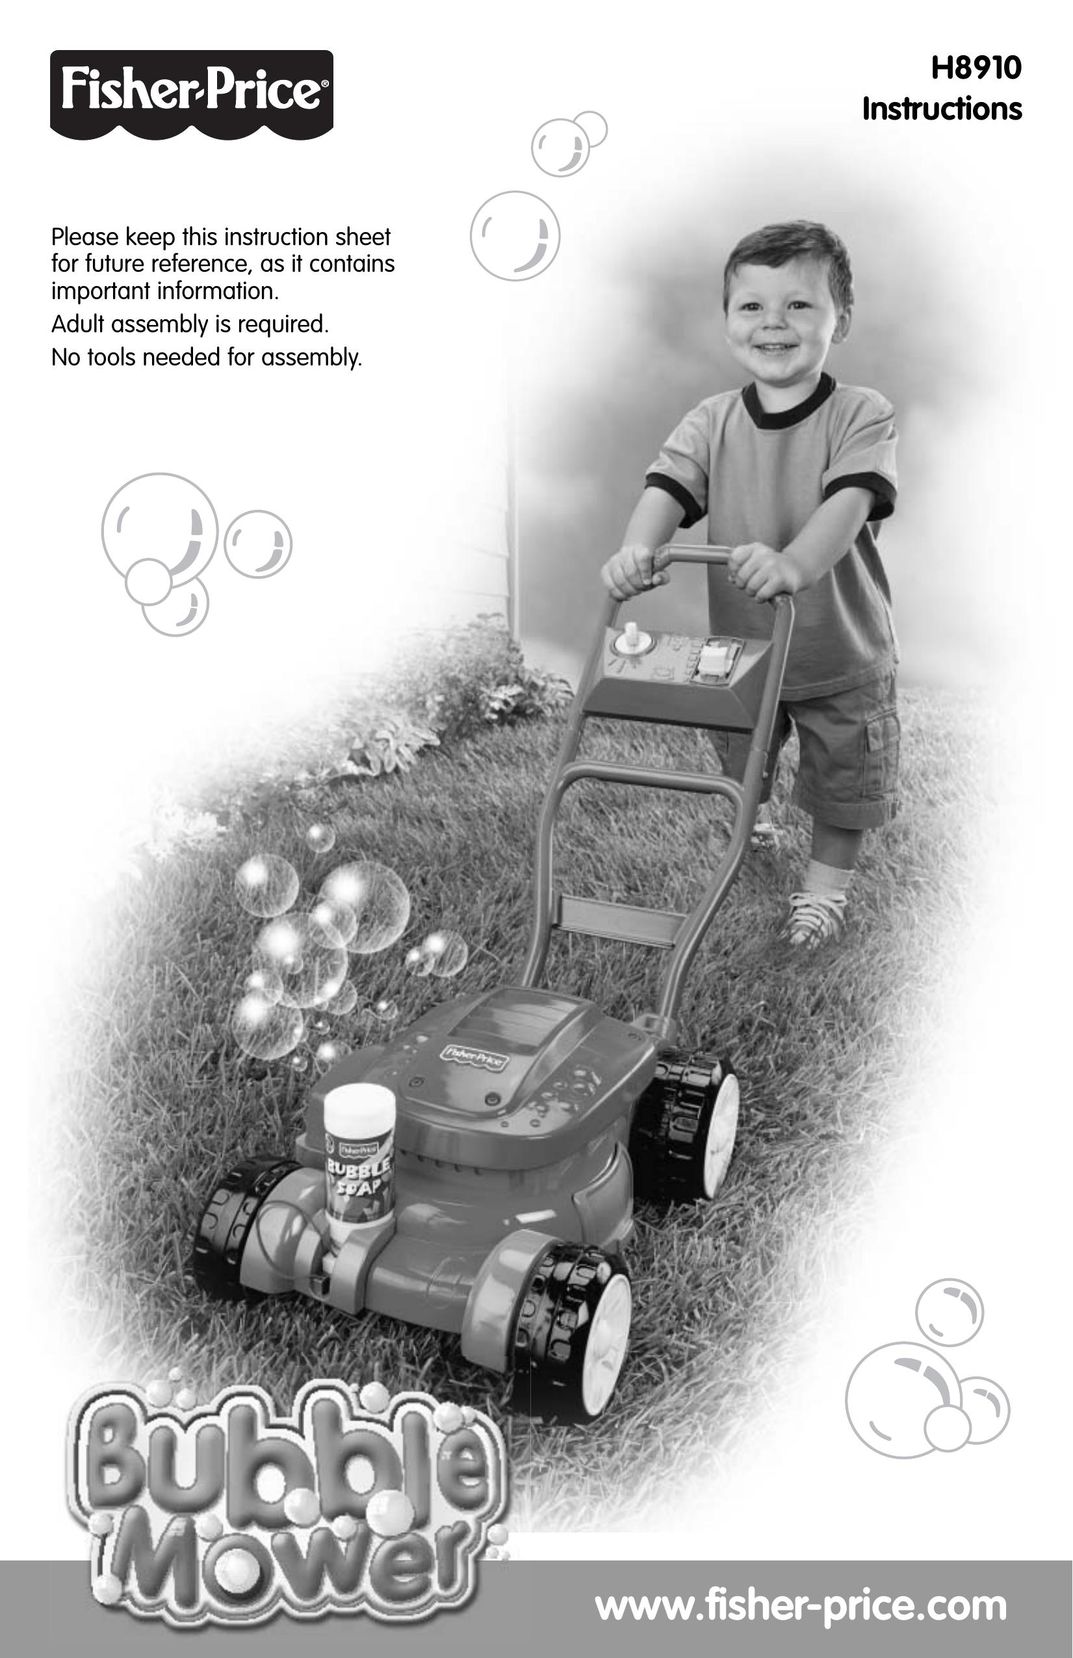 Fisher-Price H8910 Riding Toy User Manual